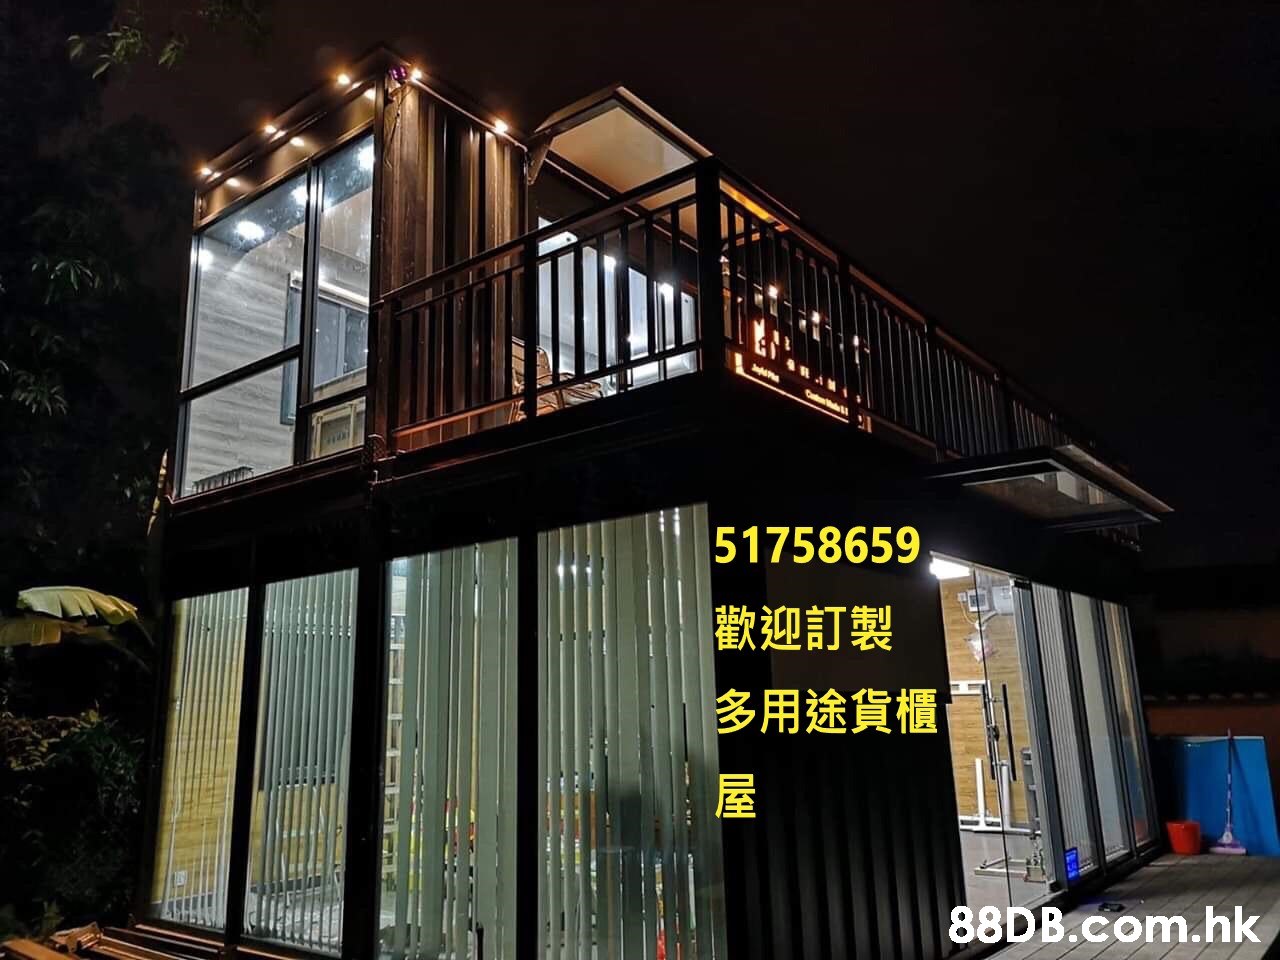 51758659 歡迎訂製 多用途貨櫃 屋 .hk nISH  Lighting,Architecture,Home,House,Building